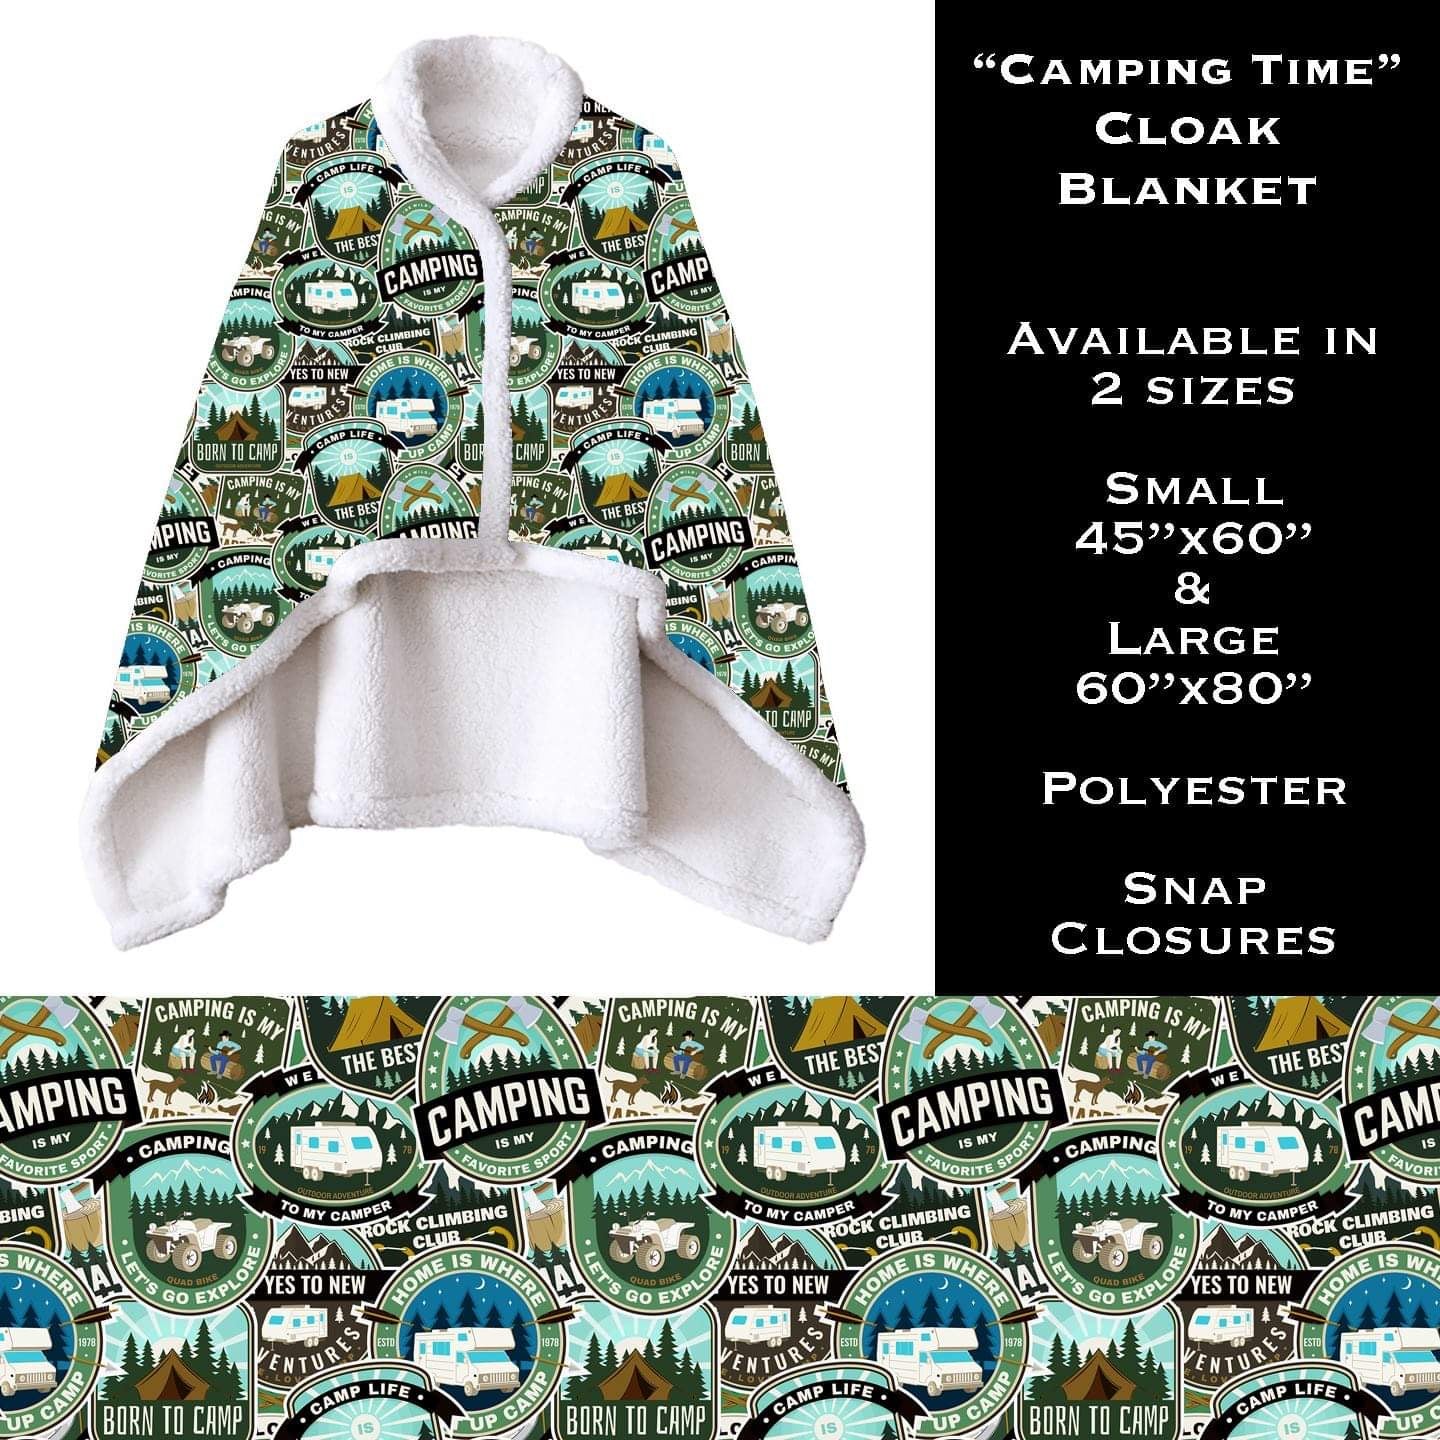 Camping Time - Cloak Blanket